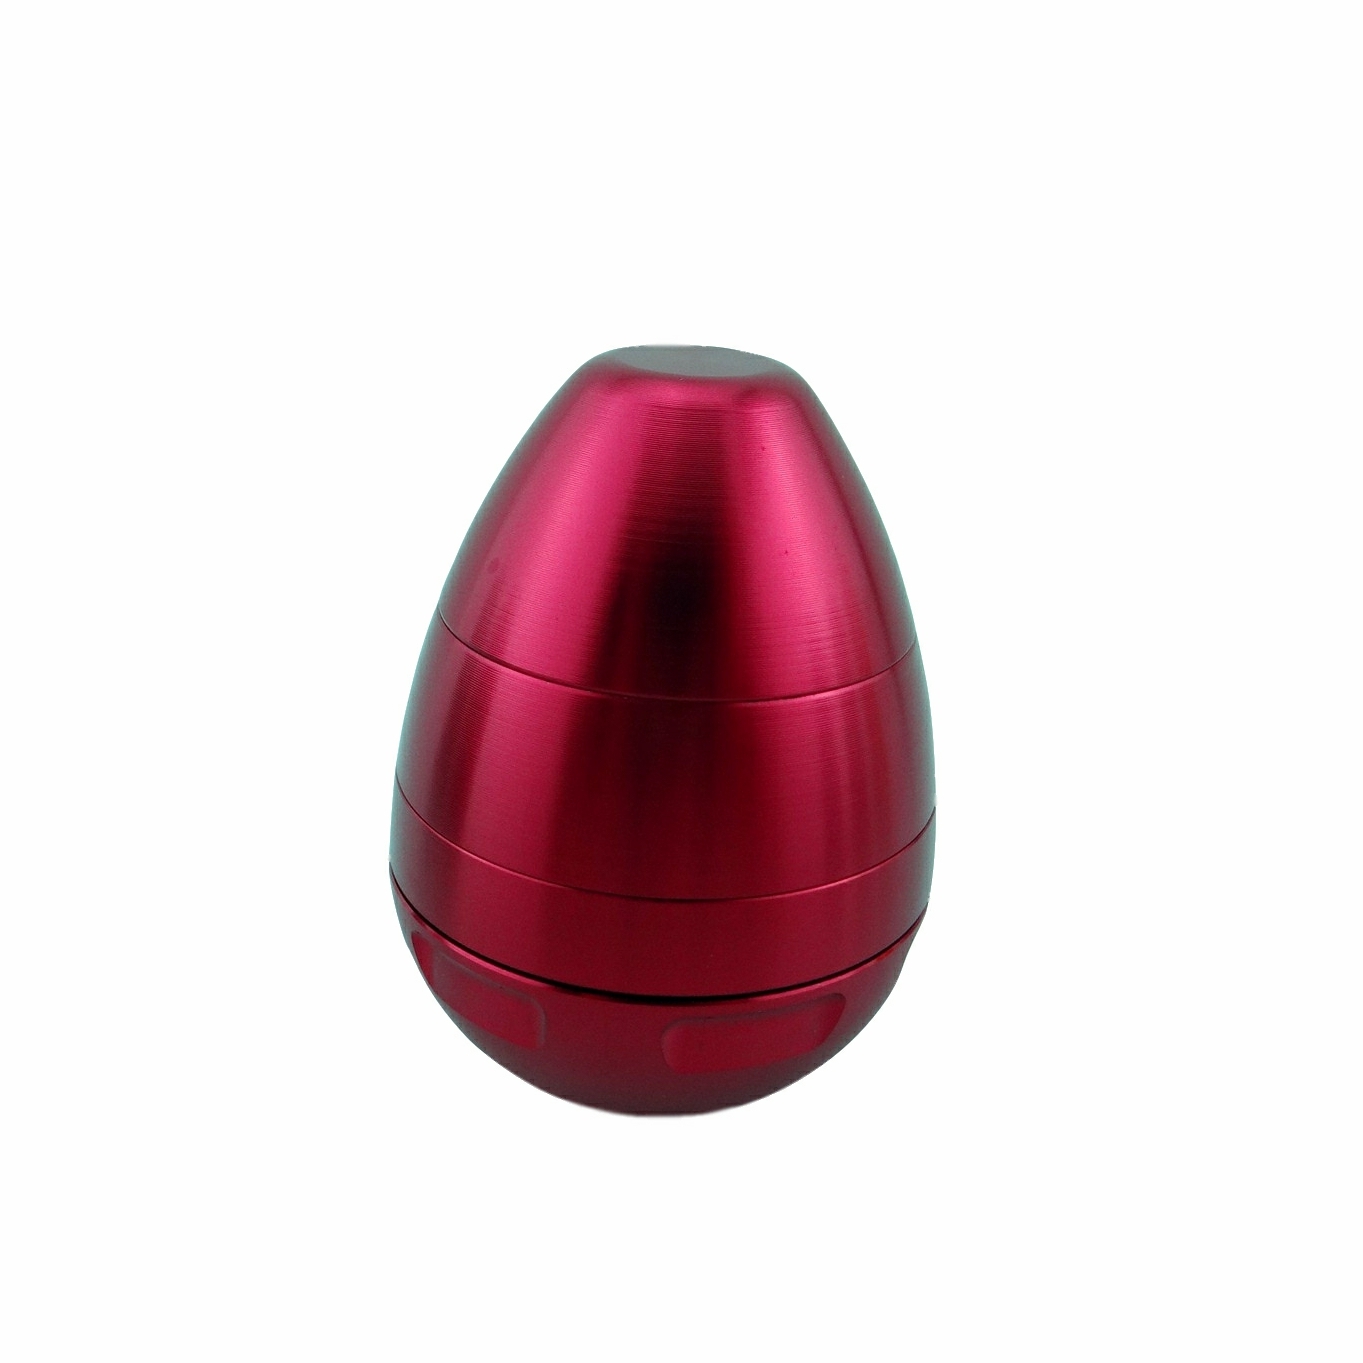 Colorful Aluminum Egg 4 Layer Tumbler Smoke Grinder